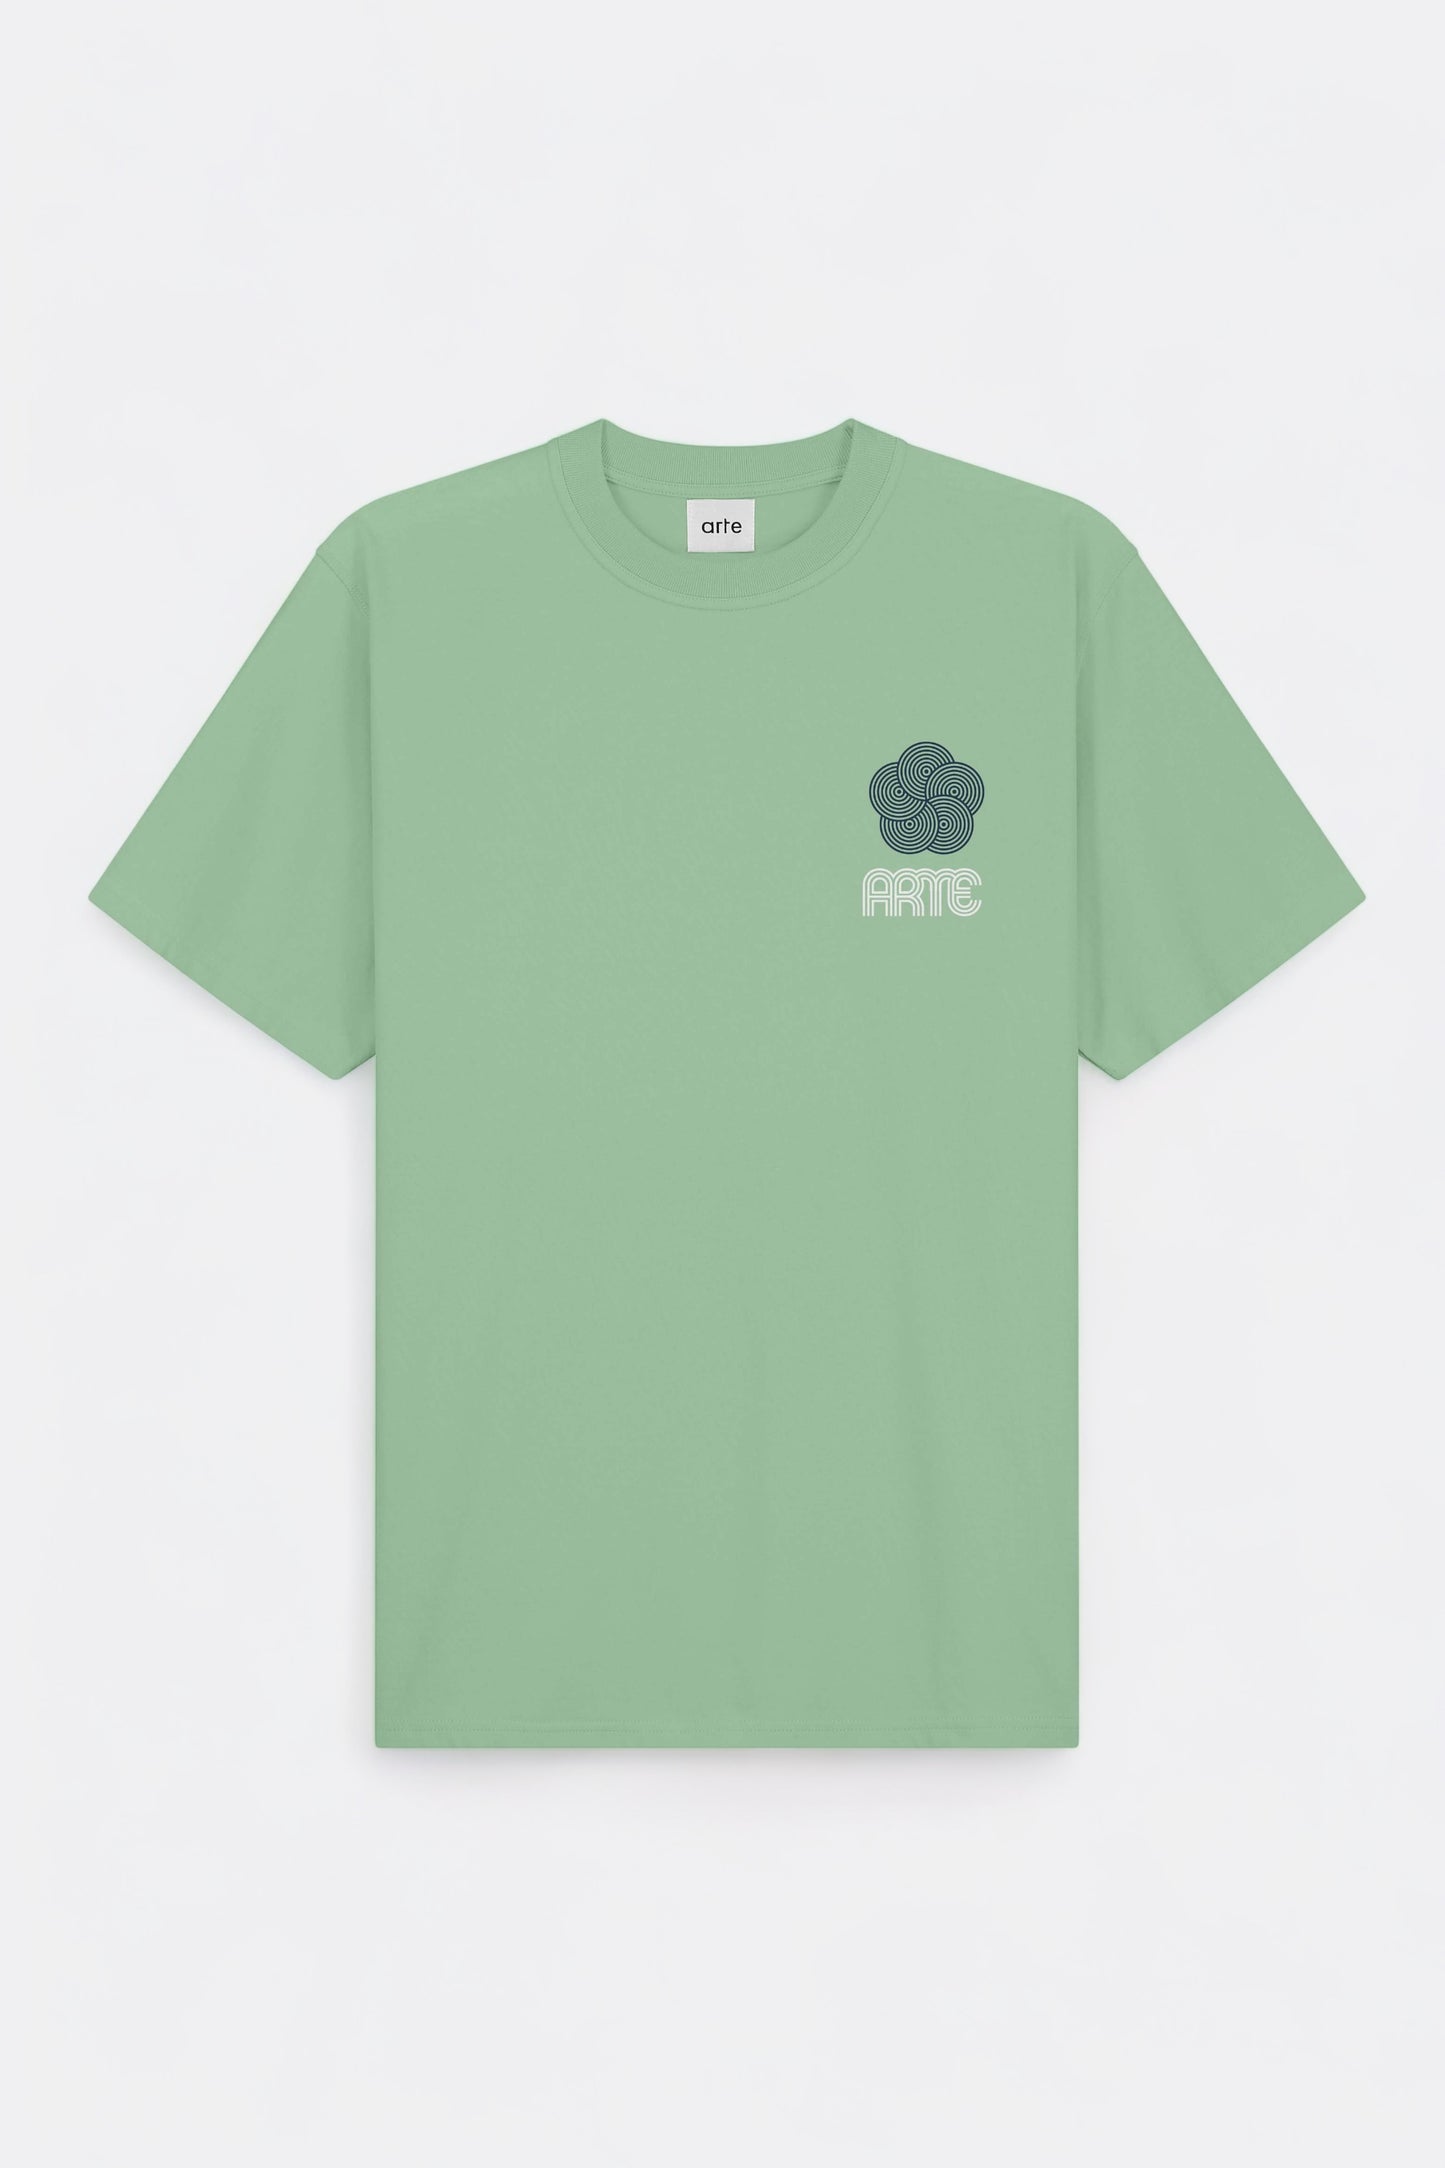 Arte - Teo Circle Flower T-shirt (Green)